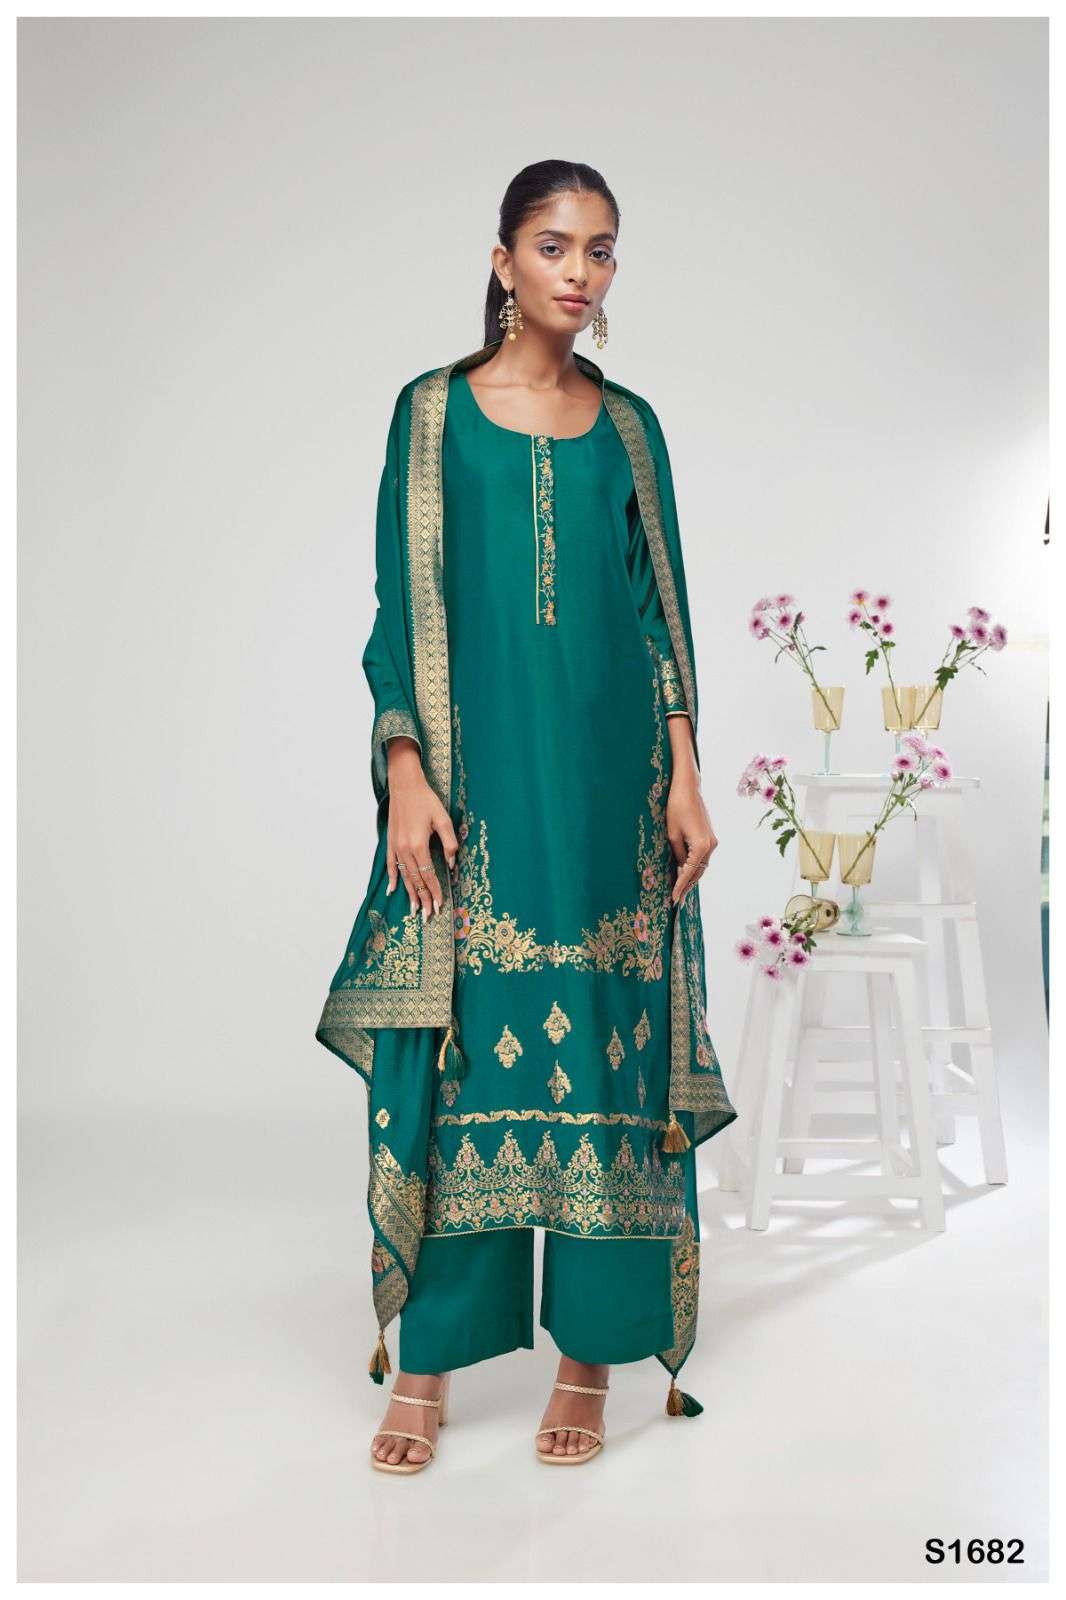 Ganga S 1682 Designer Straight Salwar Suit Collection